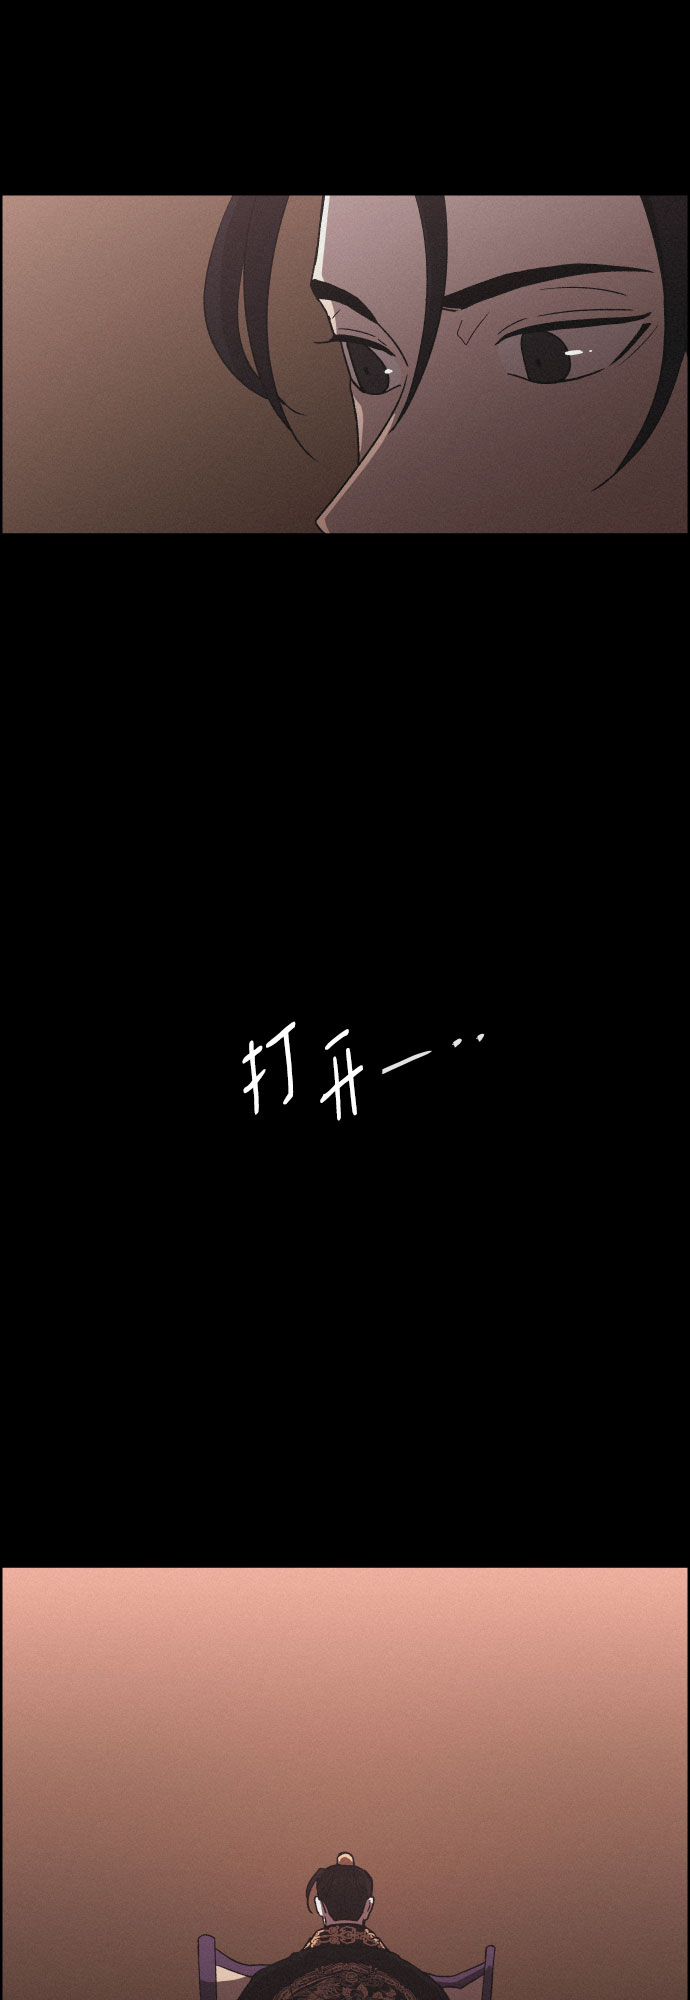 幻像恋歌 - [第64话] 困境 - 8